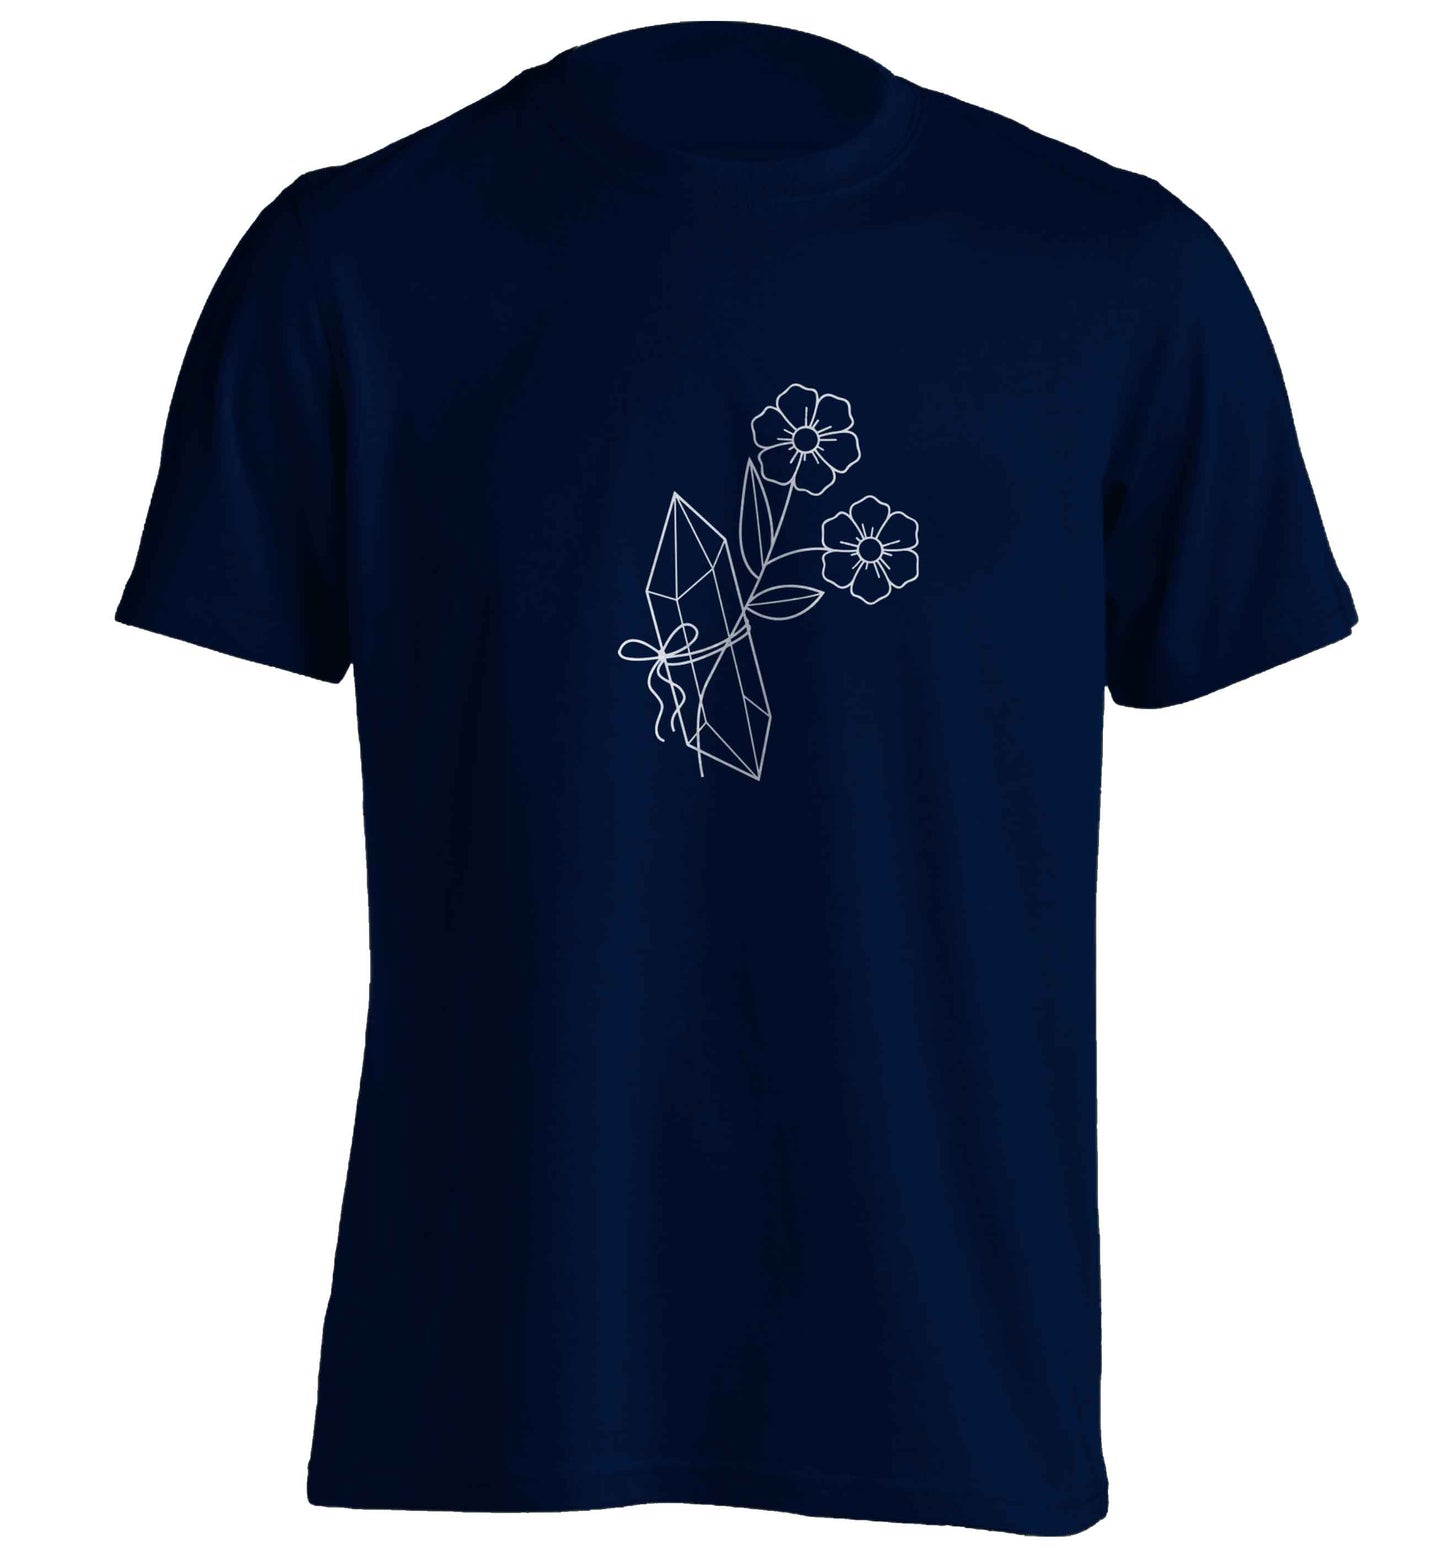 Crystal flower illustration adults unisex navy Tshirt 2XL